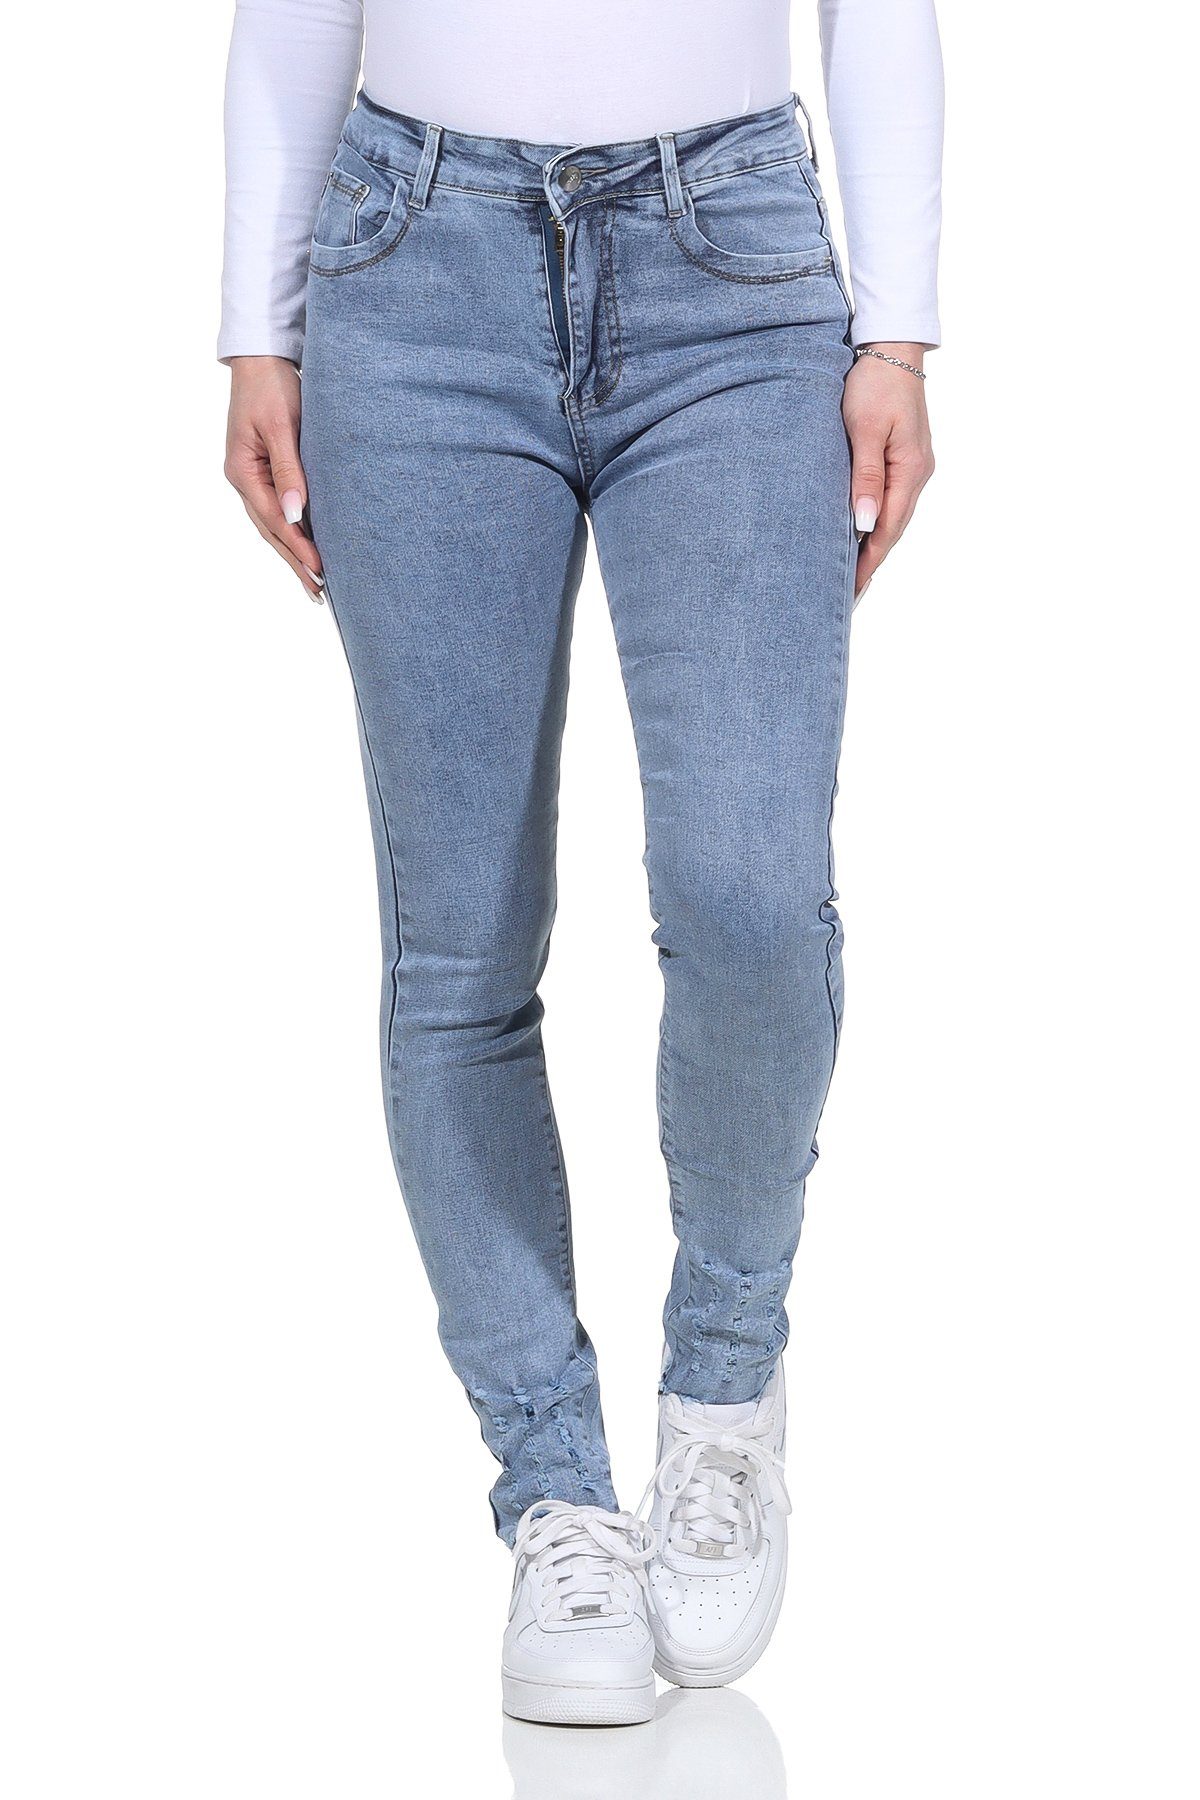 Aurela Damenmode 5-Pocket-Jeans Hellblau Damen Jeanshosen Stretch Look Jeans Distressed moderner Look Destroyed für